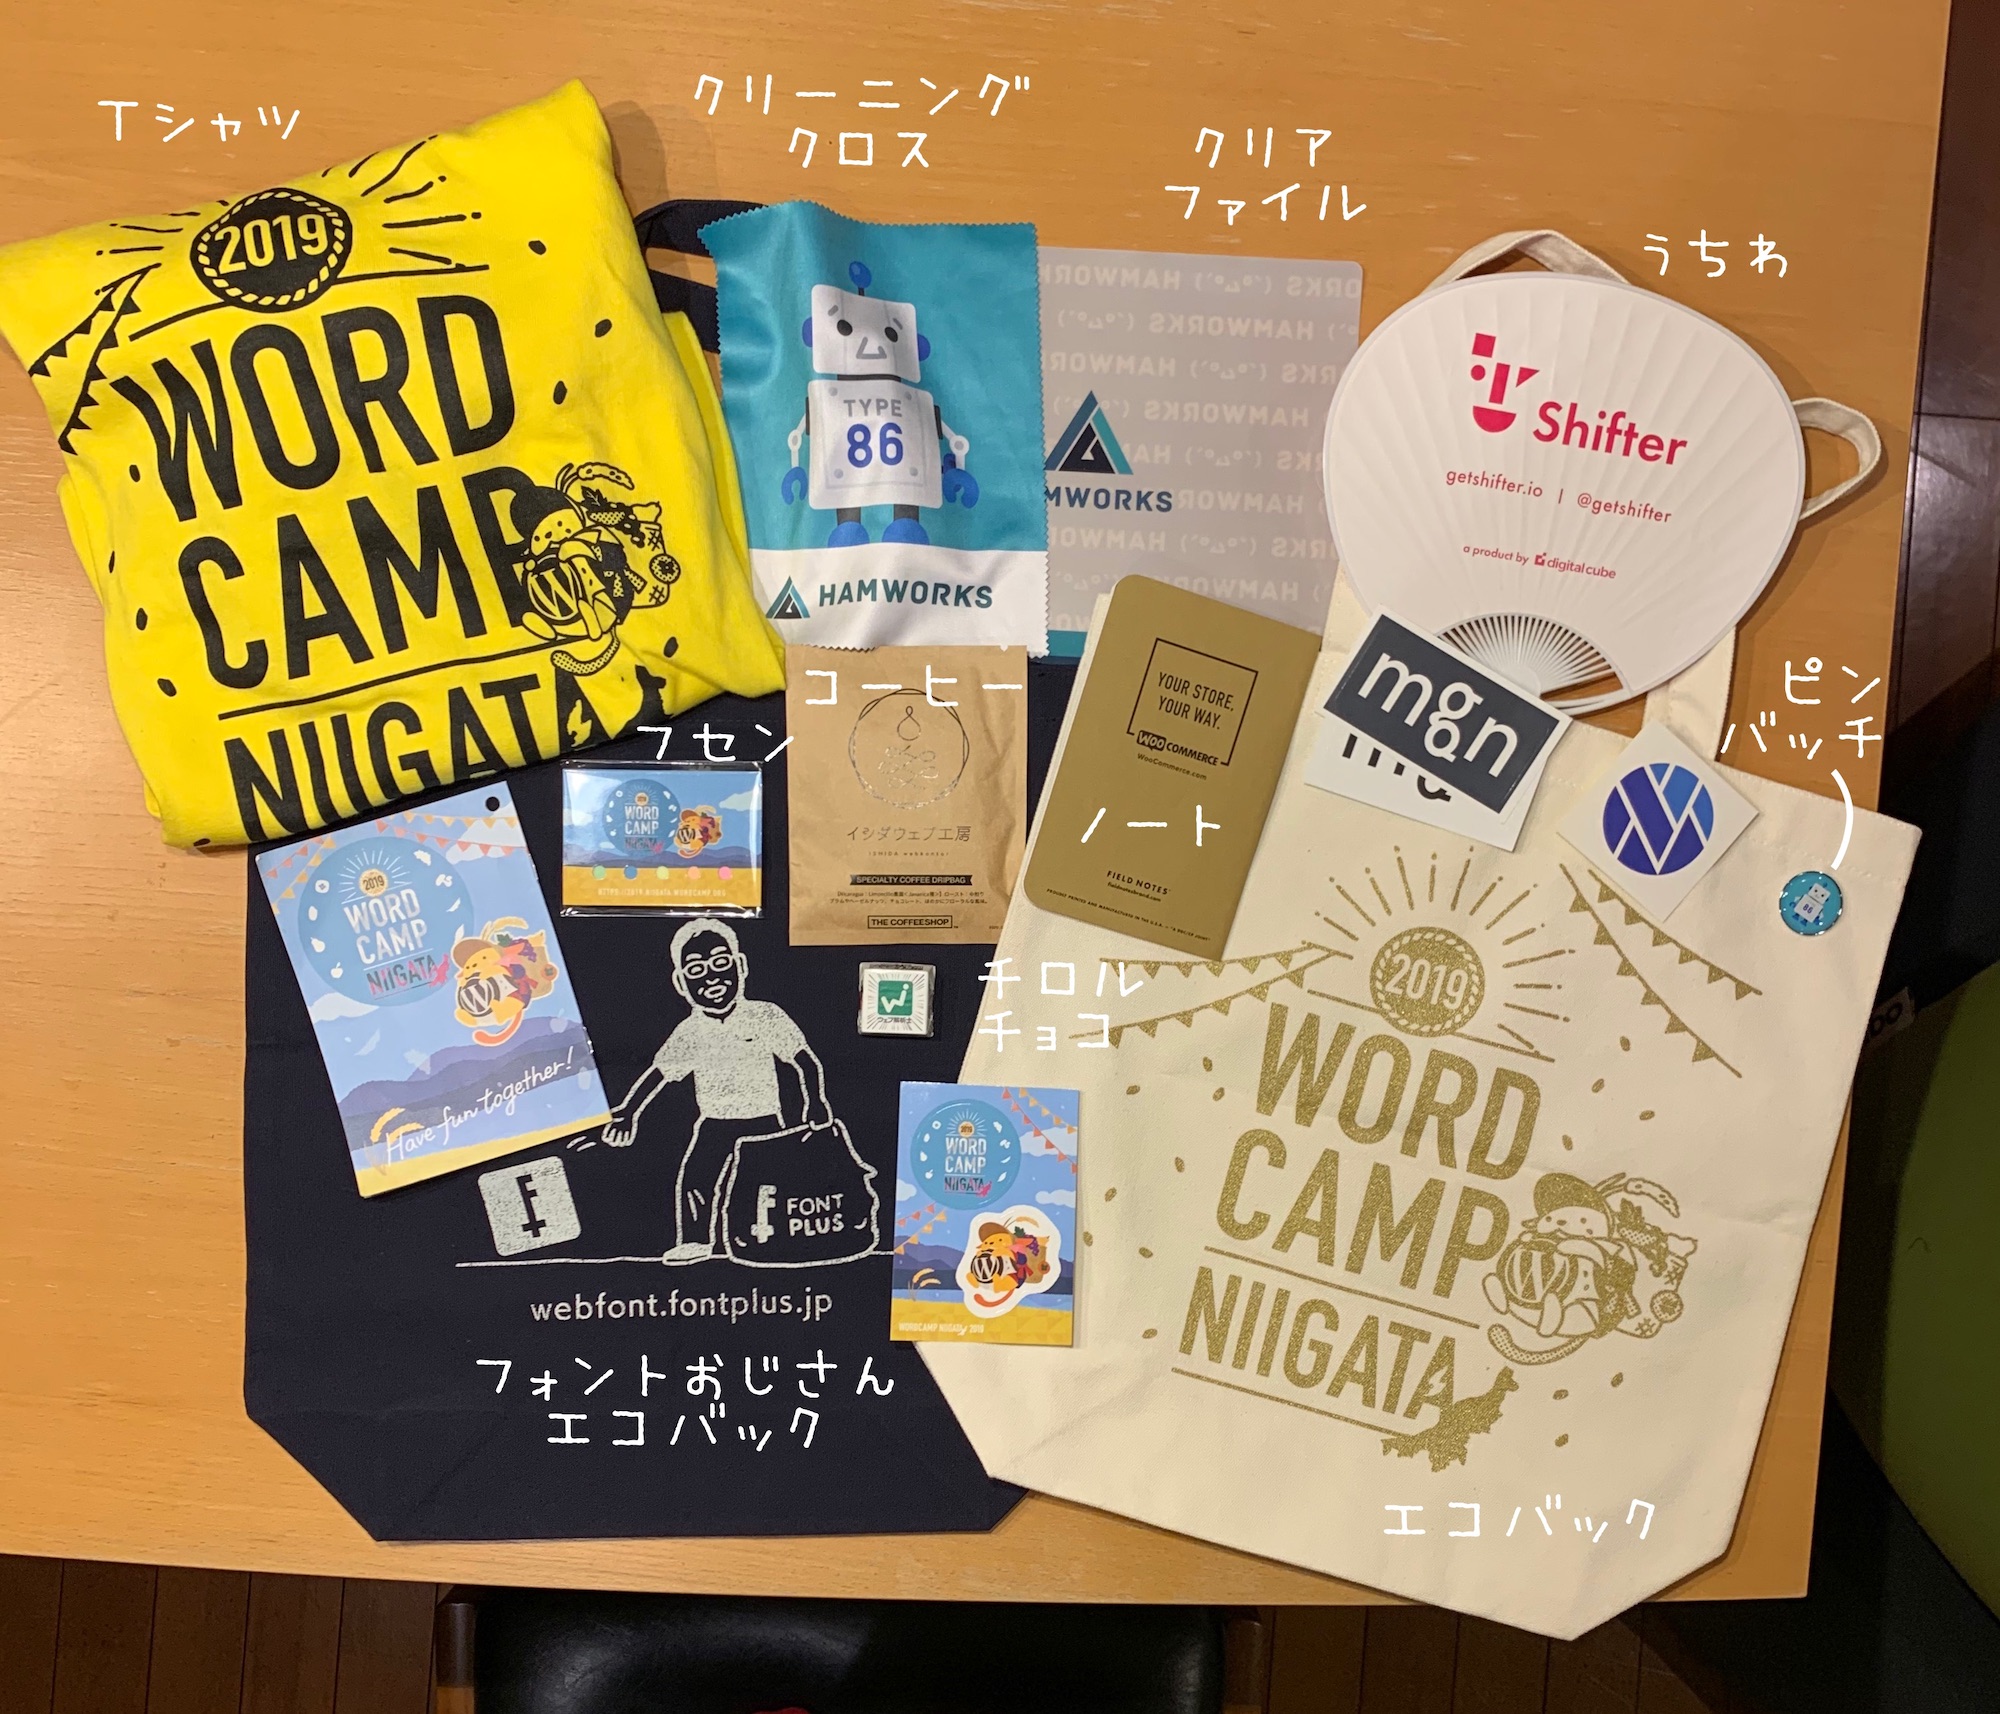 WordCamp Niigata 2019へ行ってきました